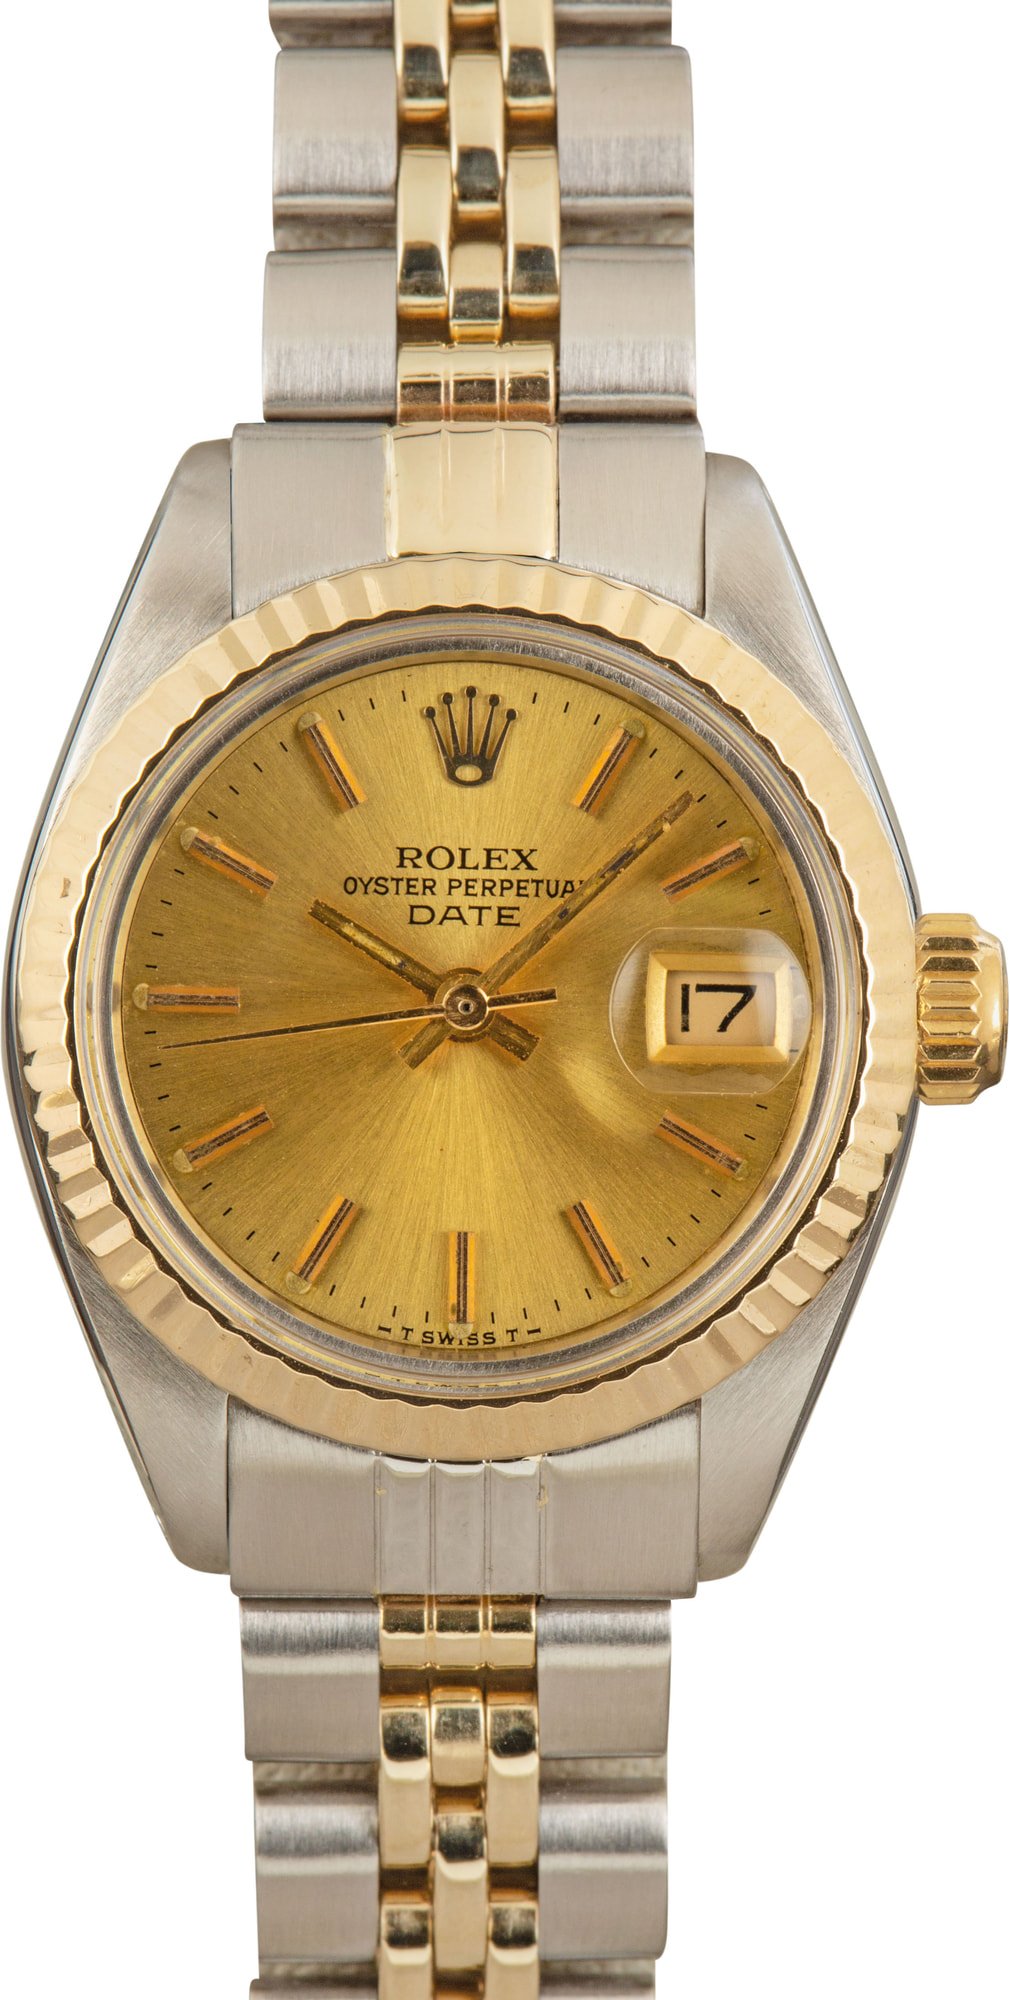 Rolex Date - BobsWatches.com